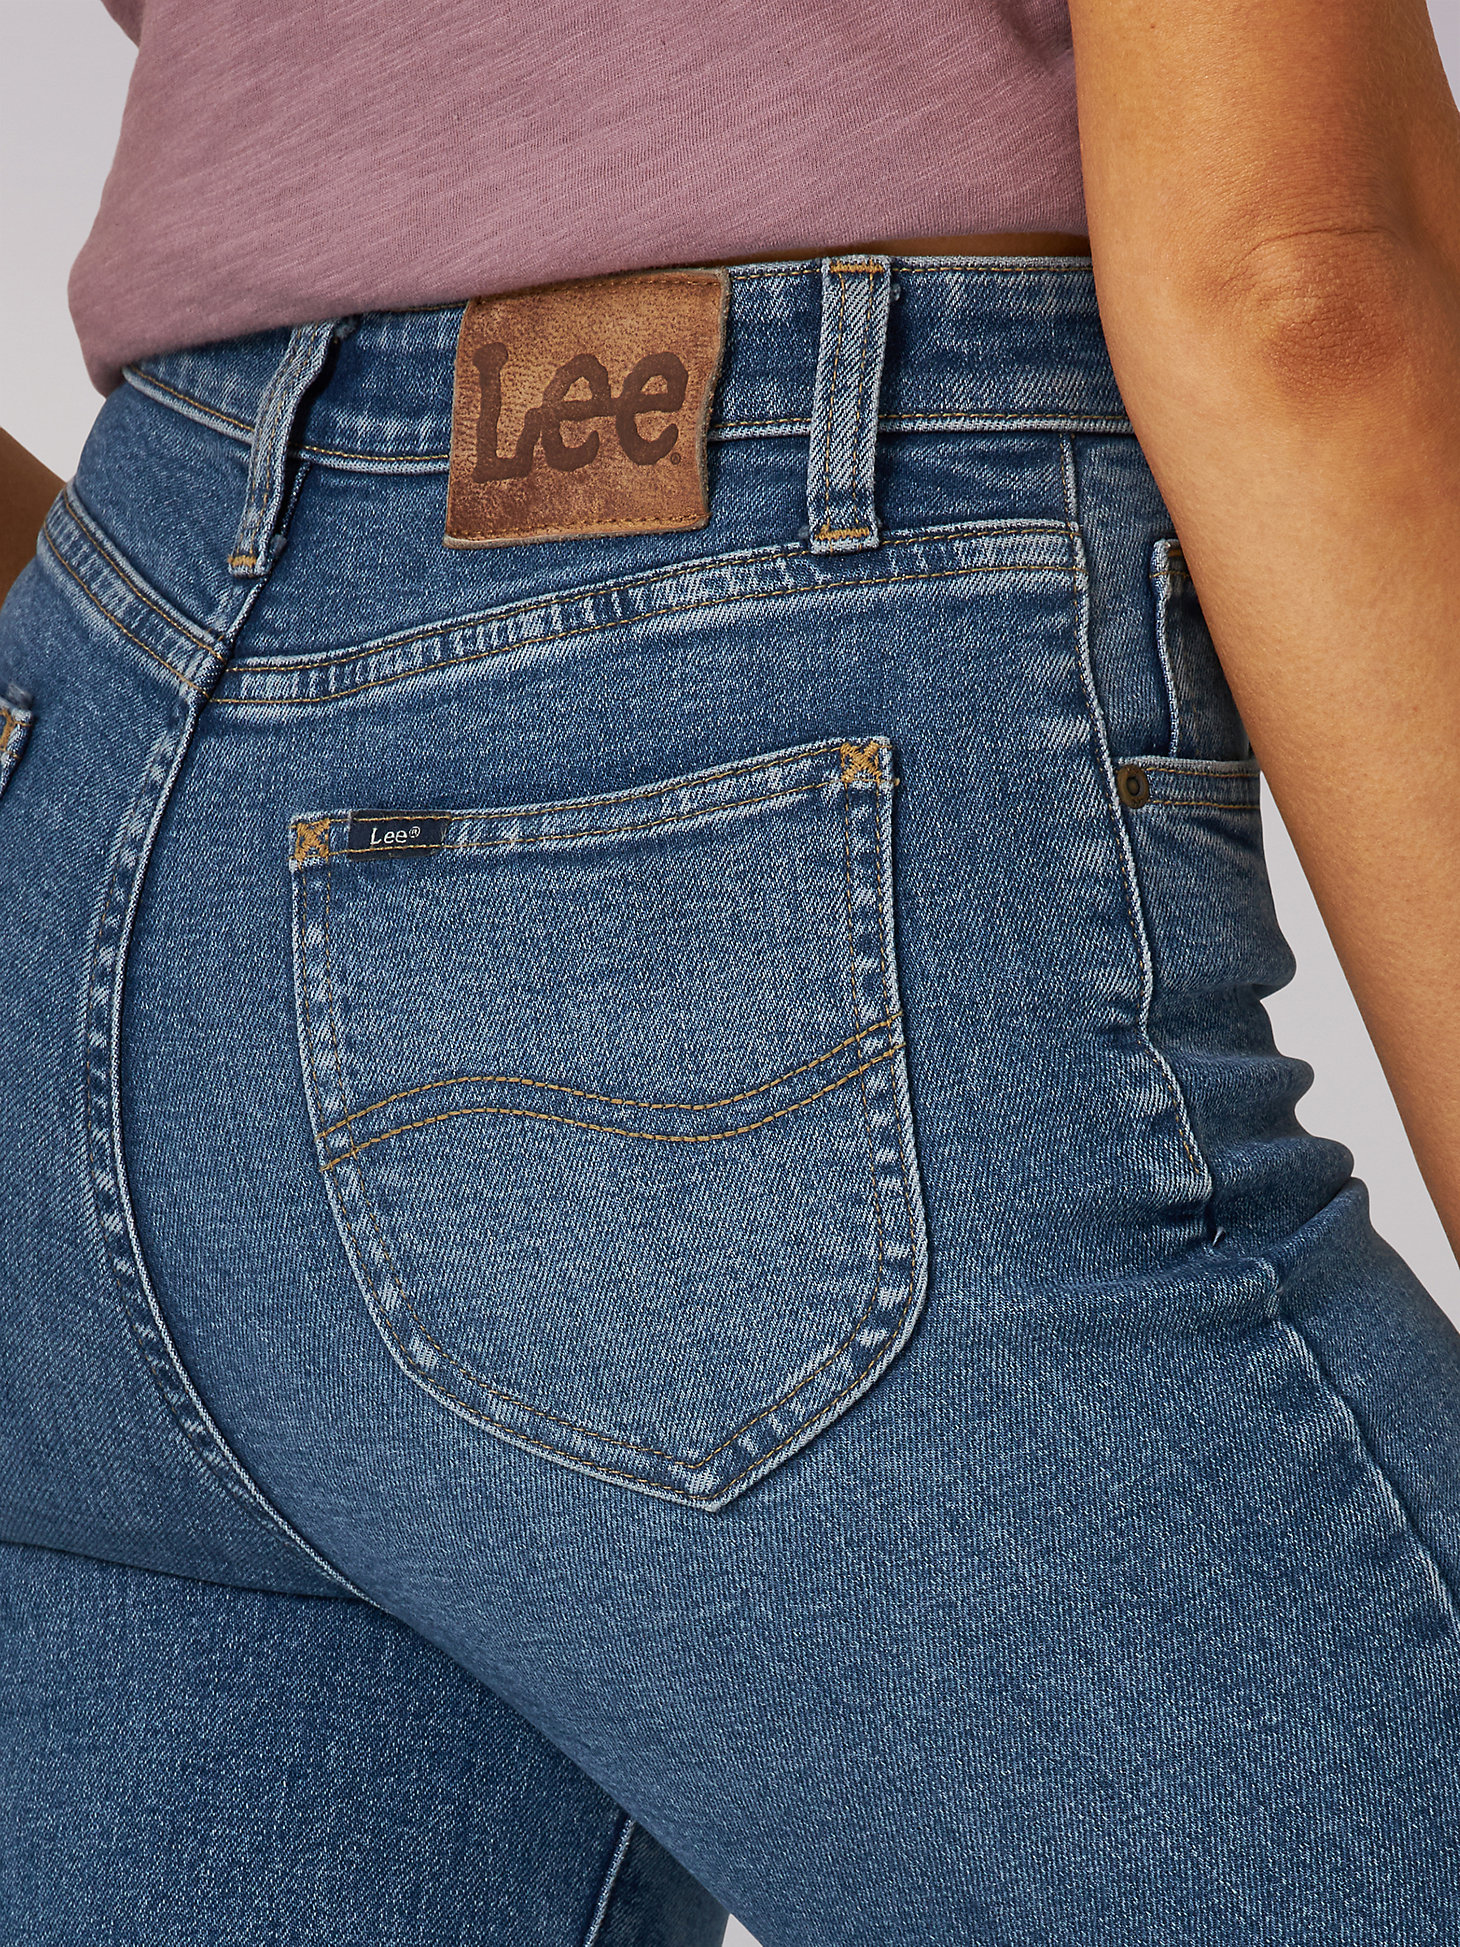 Women's Heritage High Rise Slim Fit Flare Jean in Clear Cut alternative view 5